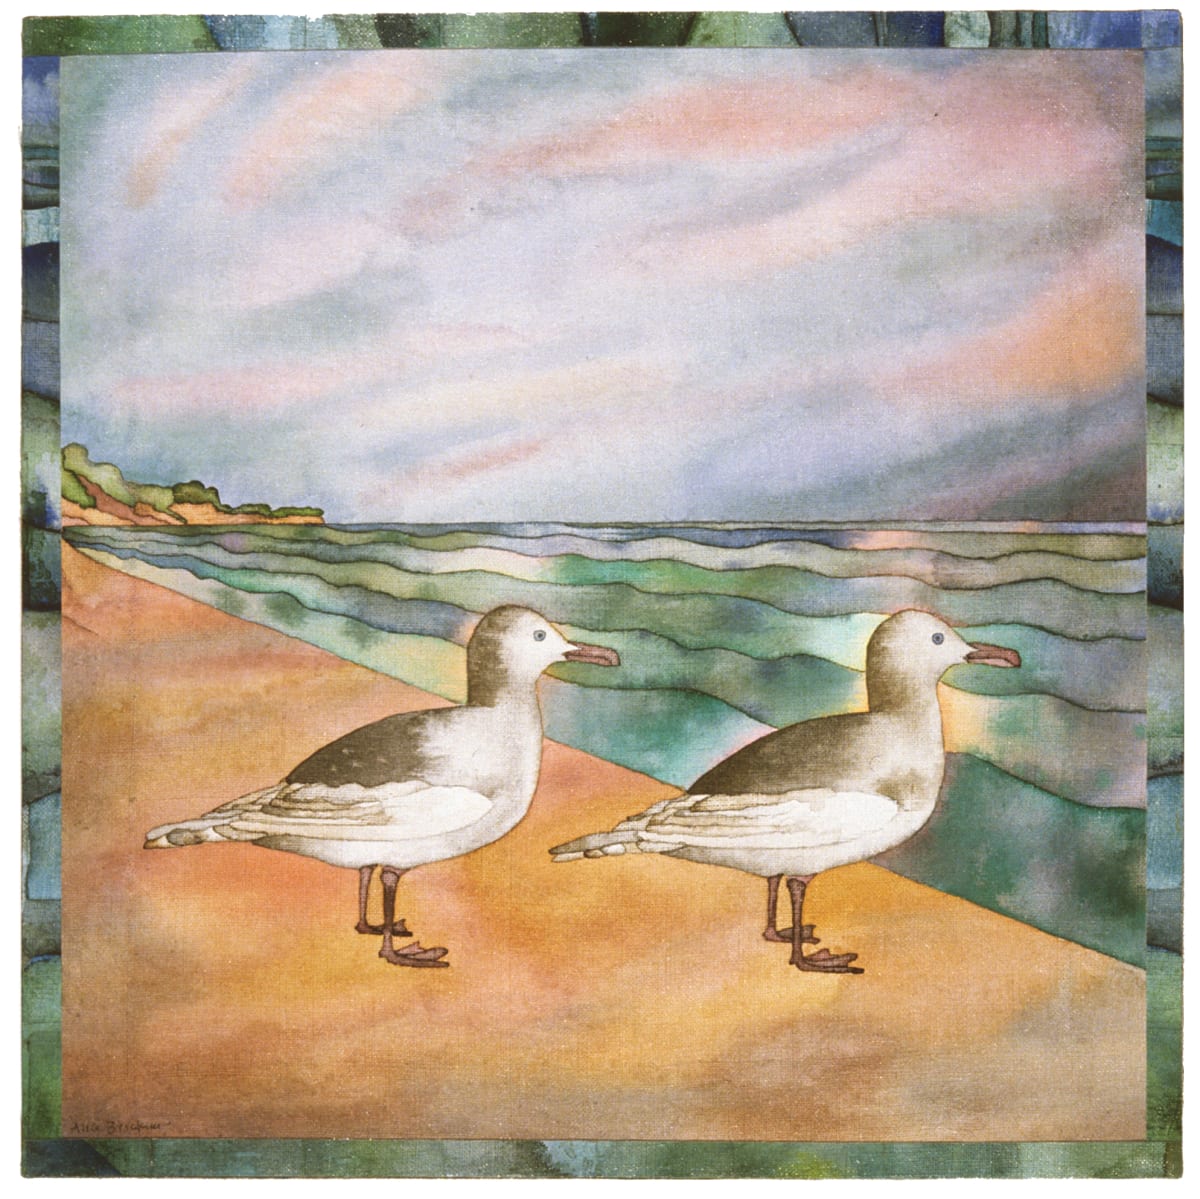 Gulls at Water’s Edge I and II by alice brickner  Image: Gulls at Waters Edge I